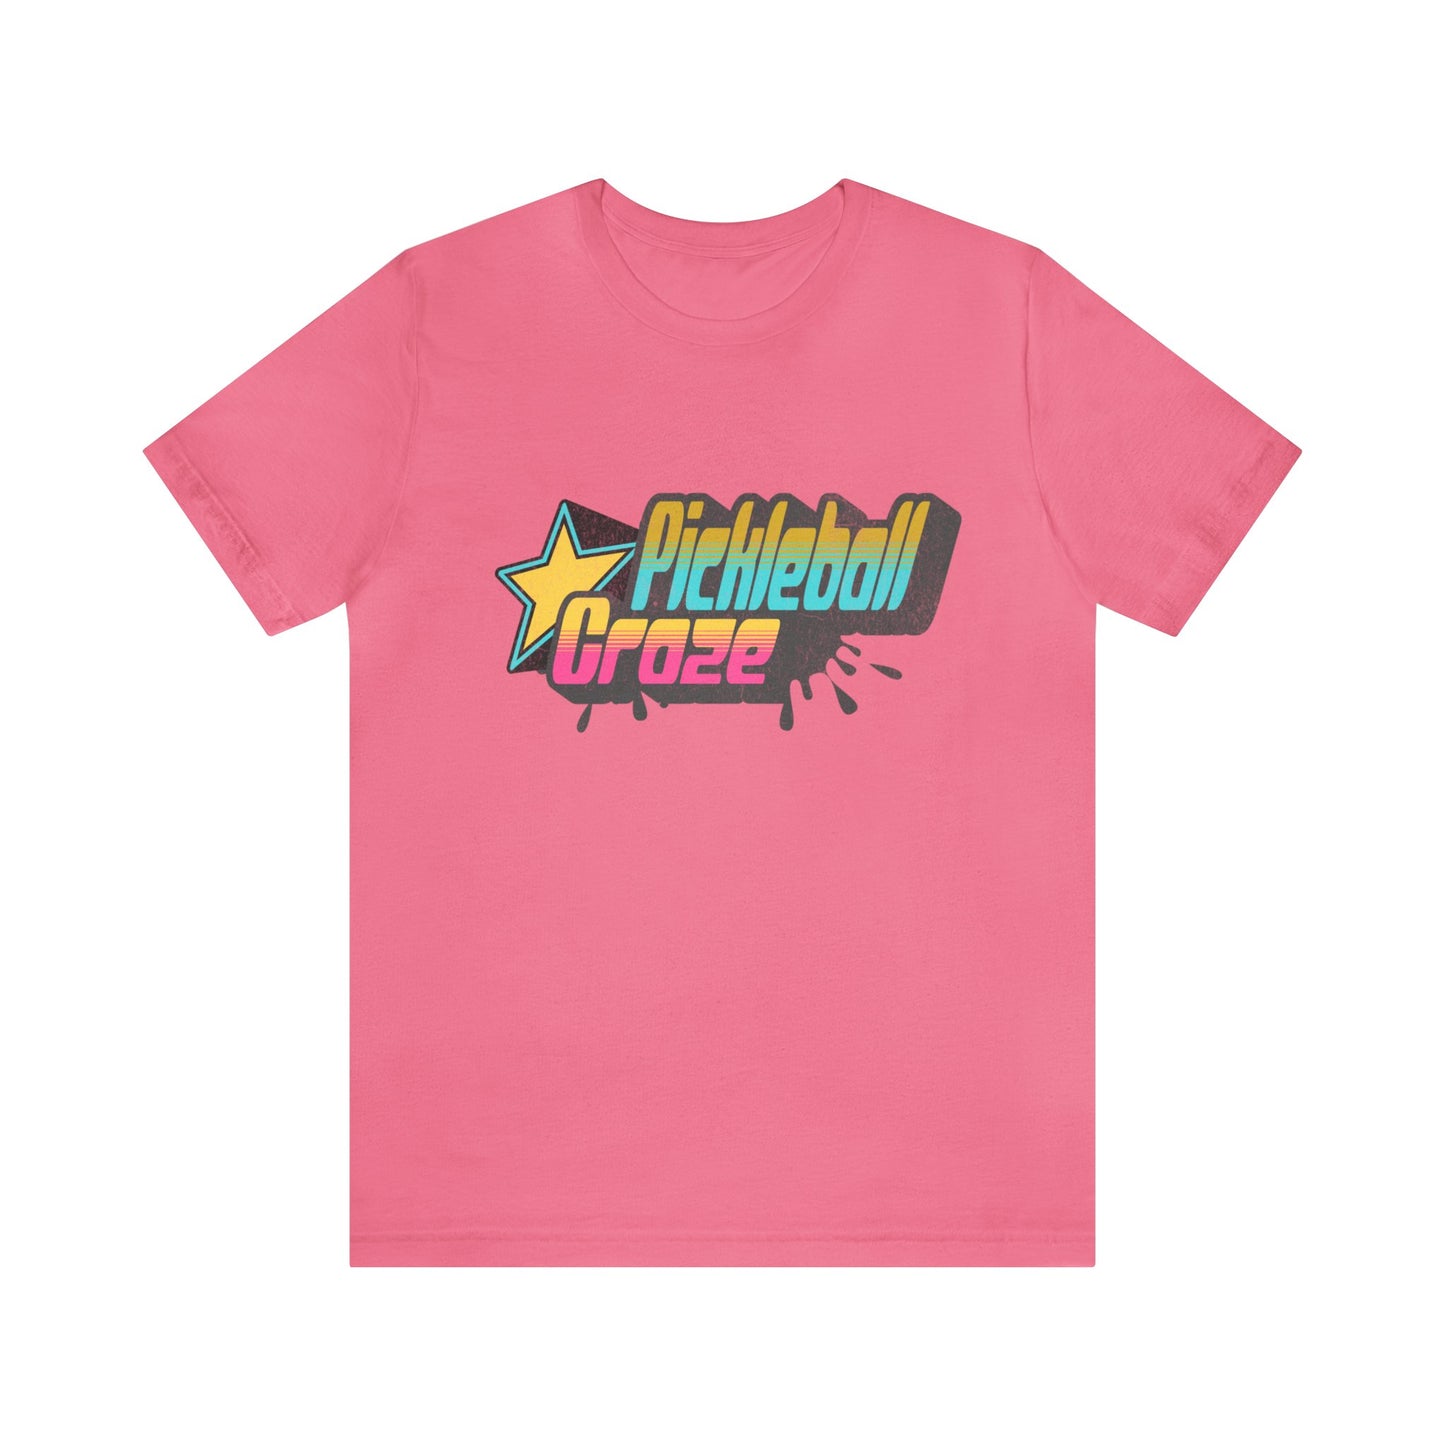 Pickleball Craze - Comfy Cotton Pickleball Pride Shirt